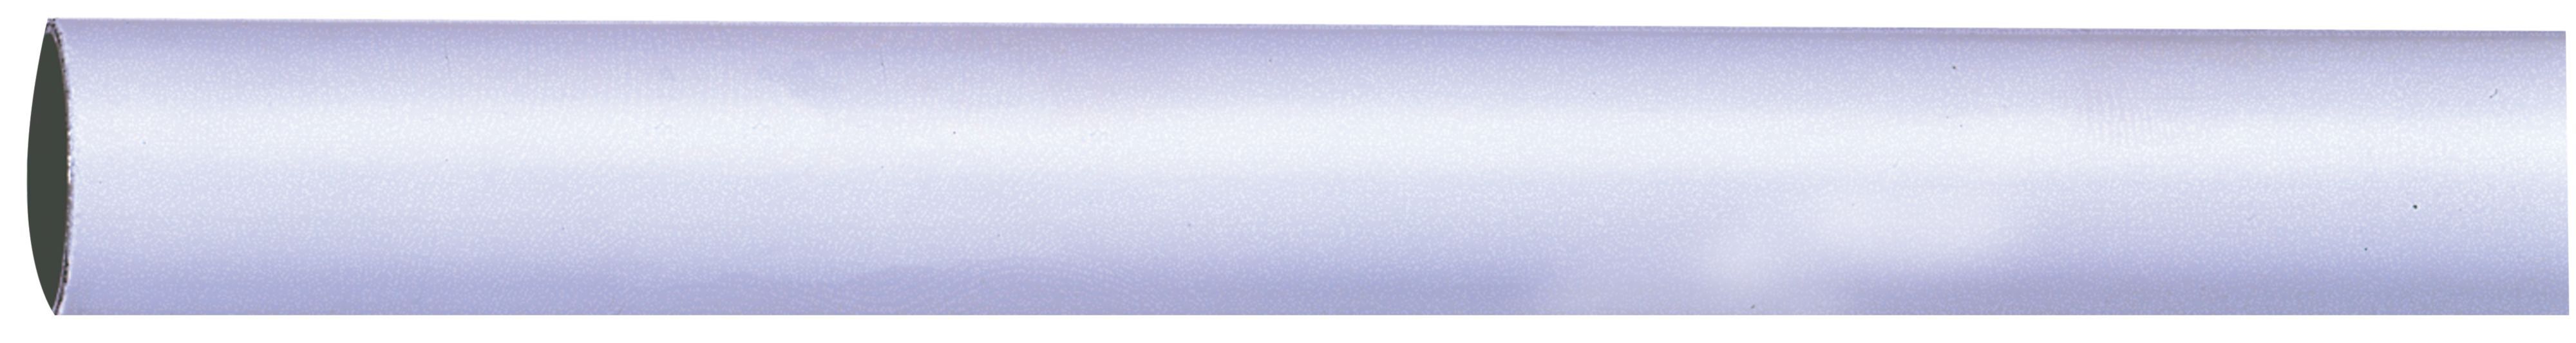 Colorail White Steel Round Tube, (L)1.83m (Dia)19mm